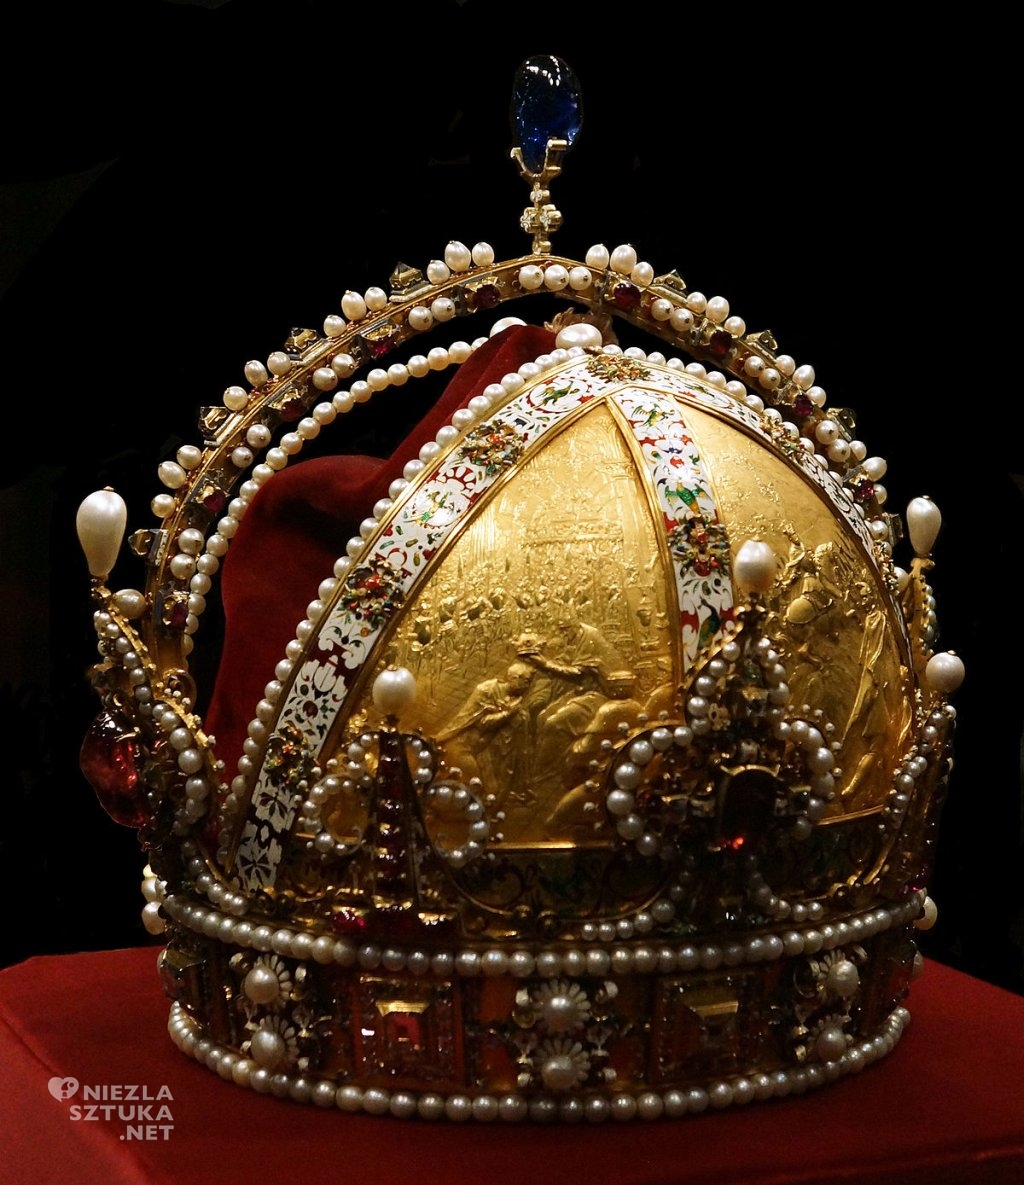 Cesarska korona Austrii